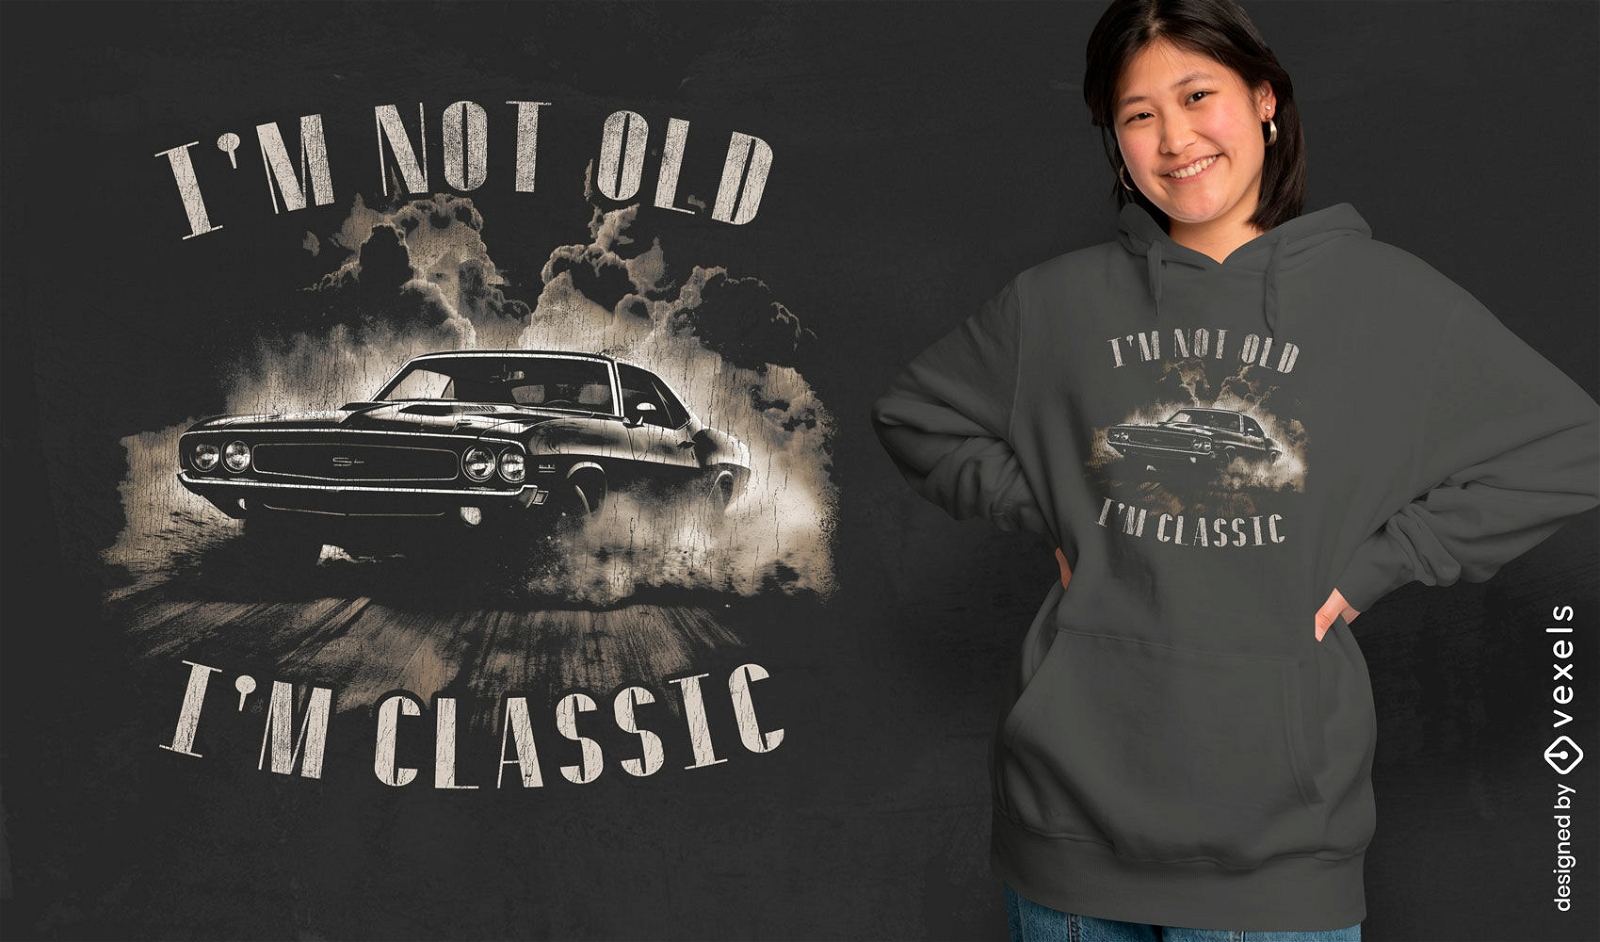 Funny classic car quote t-shirt design